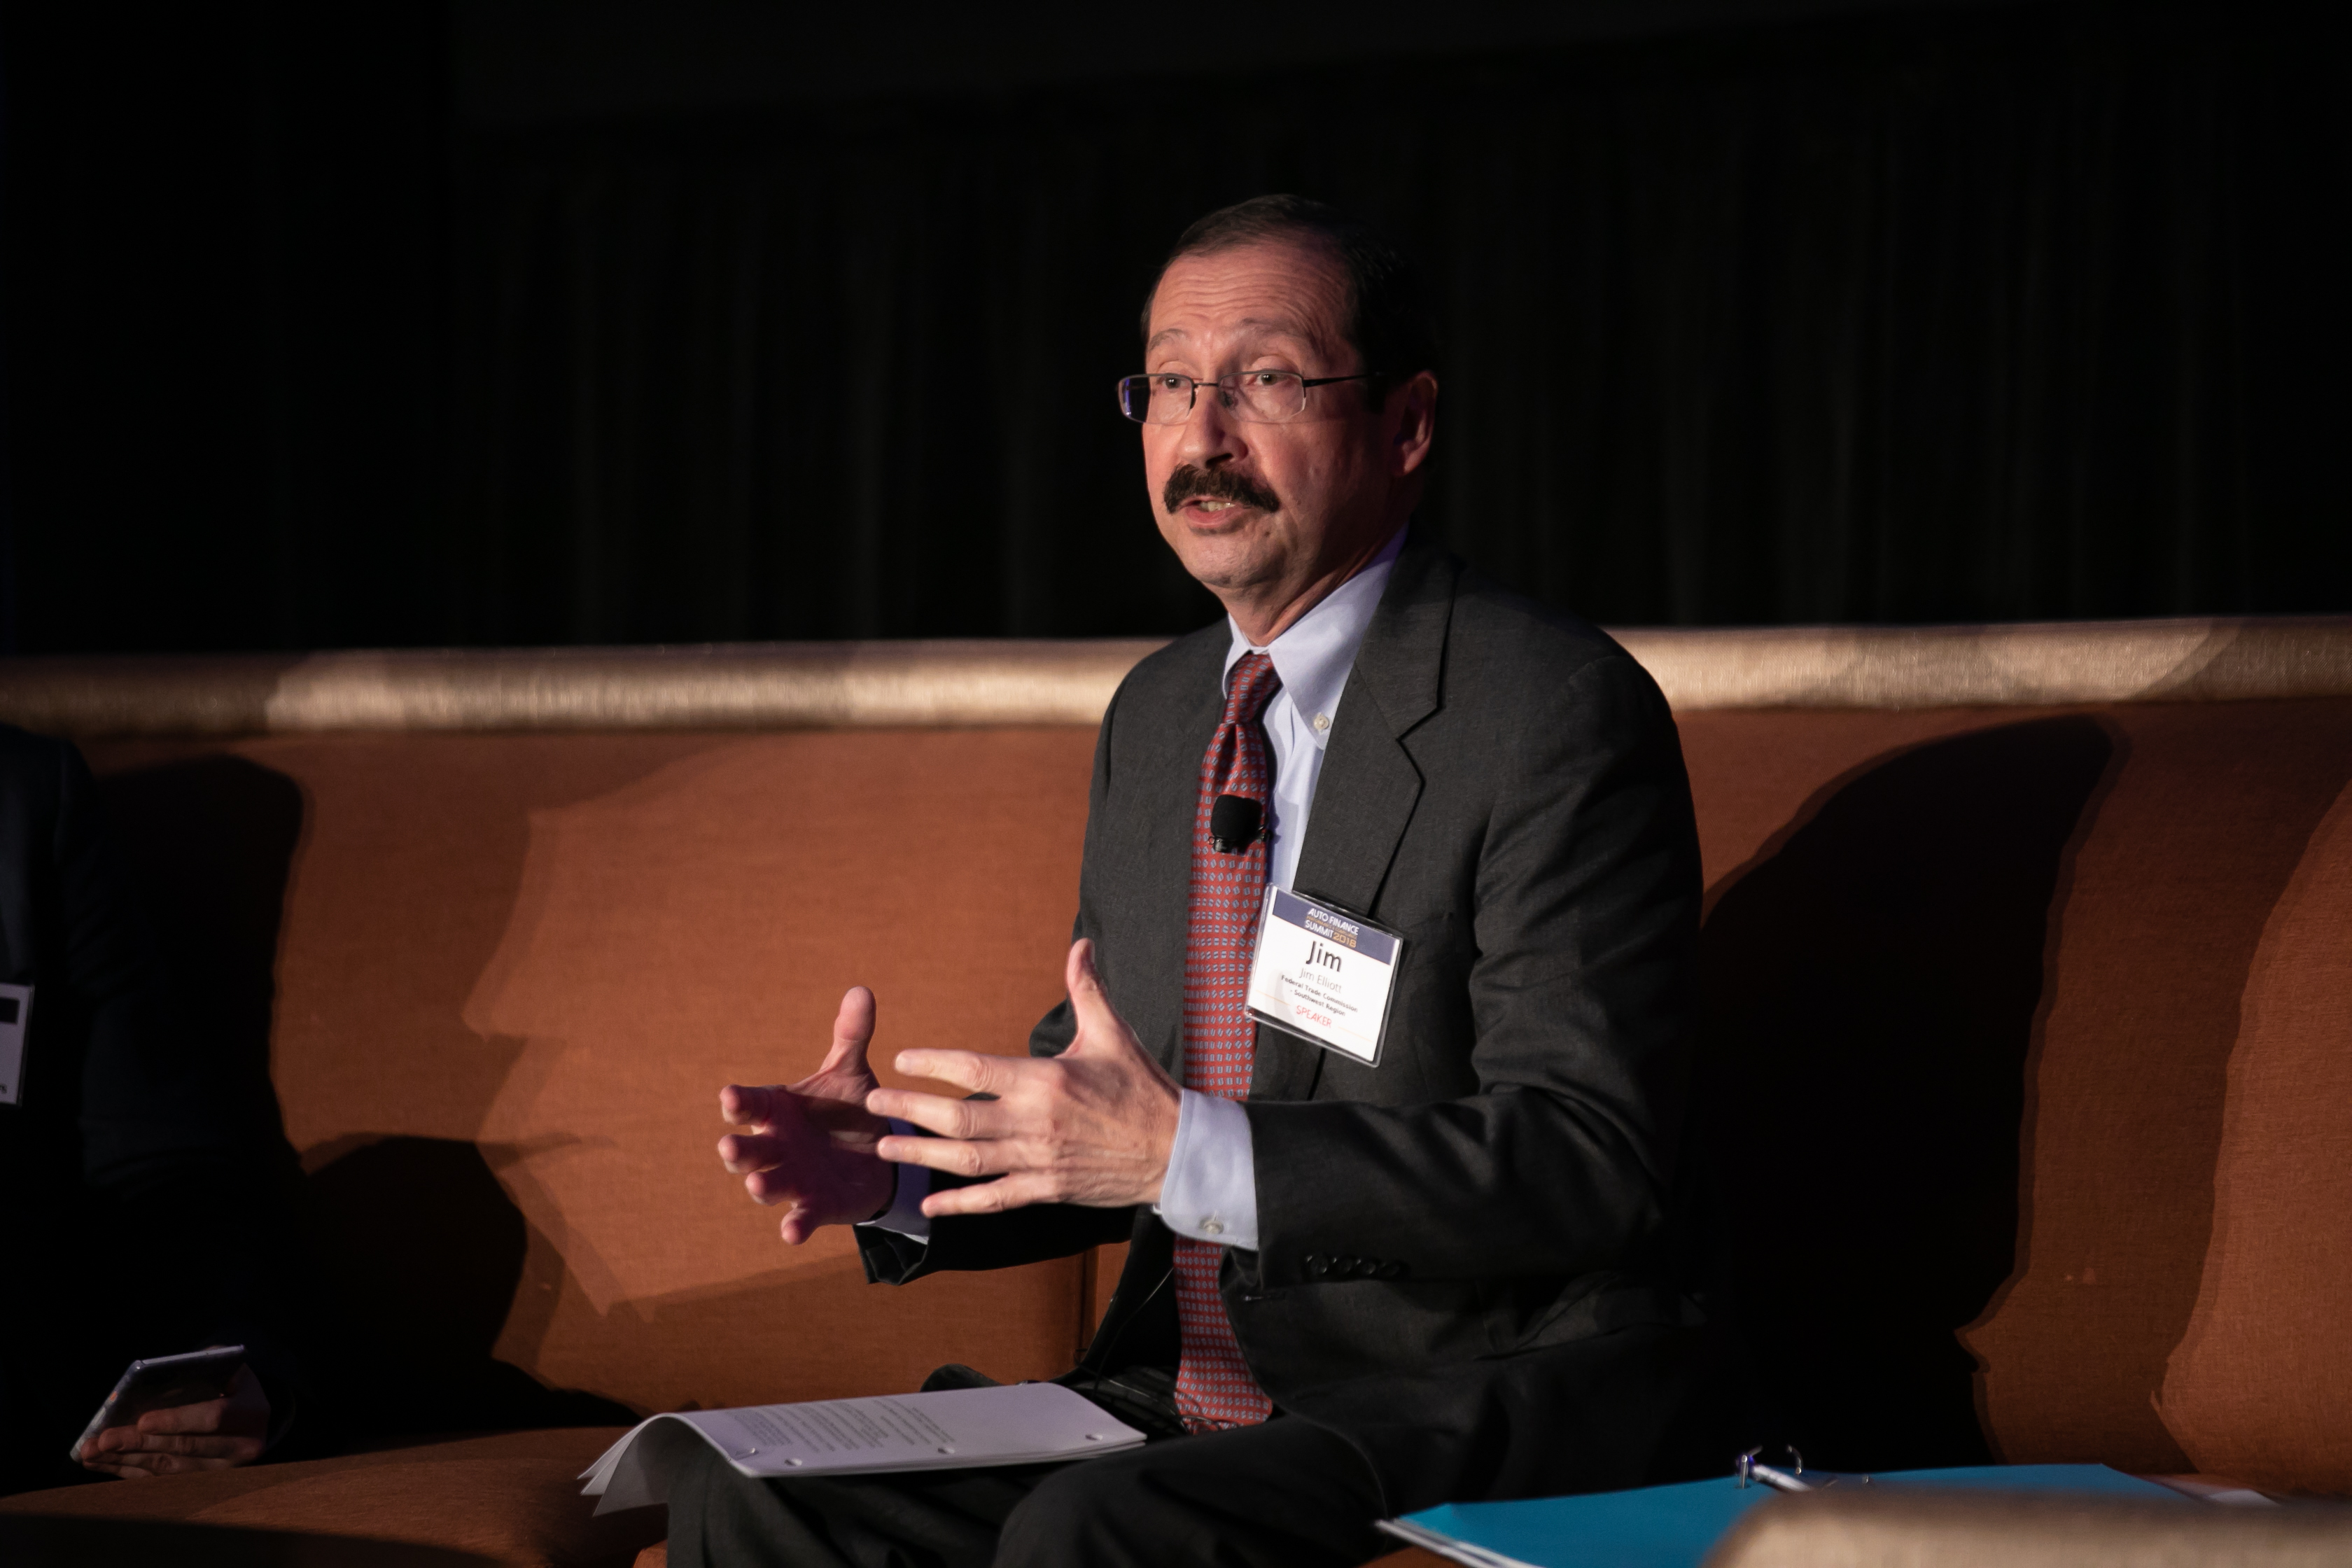 Jim Elliott, assistant regional director for the Federal Trade Commission’s Southwest region